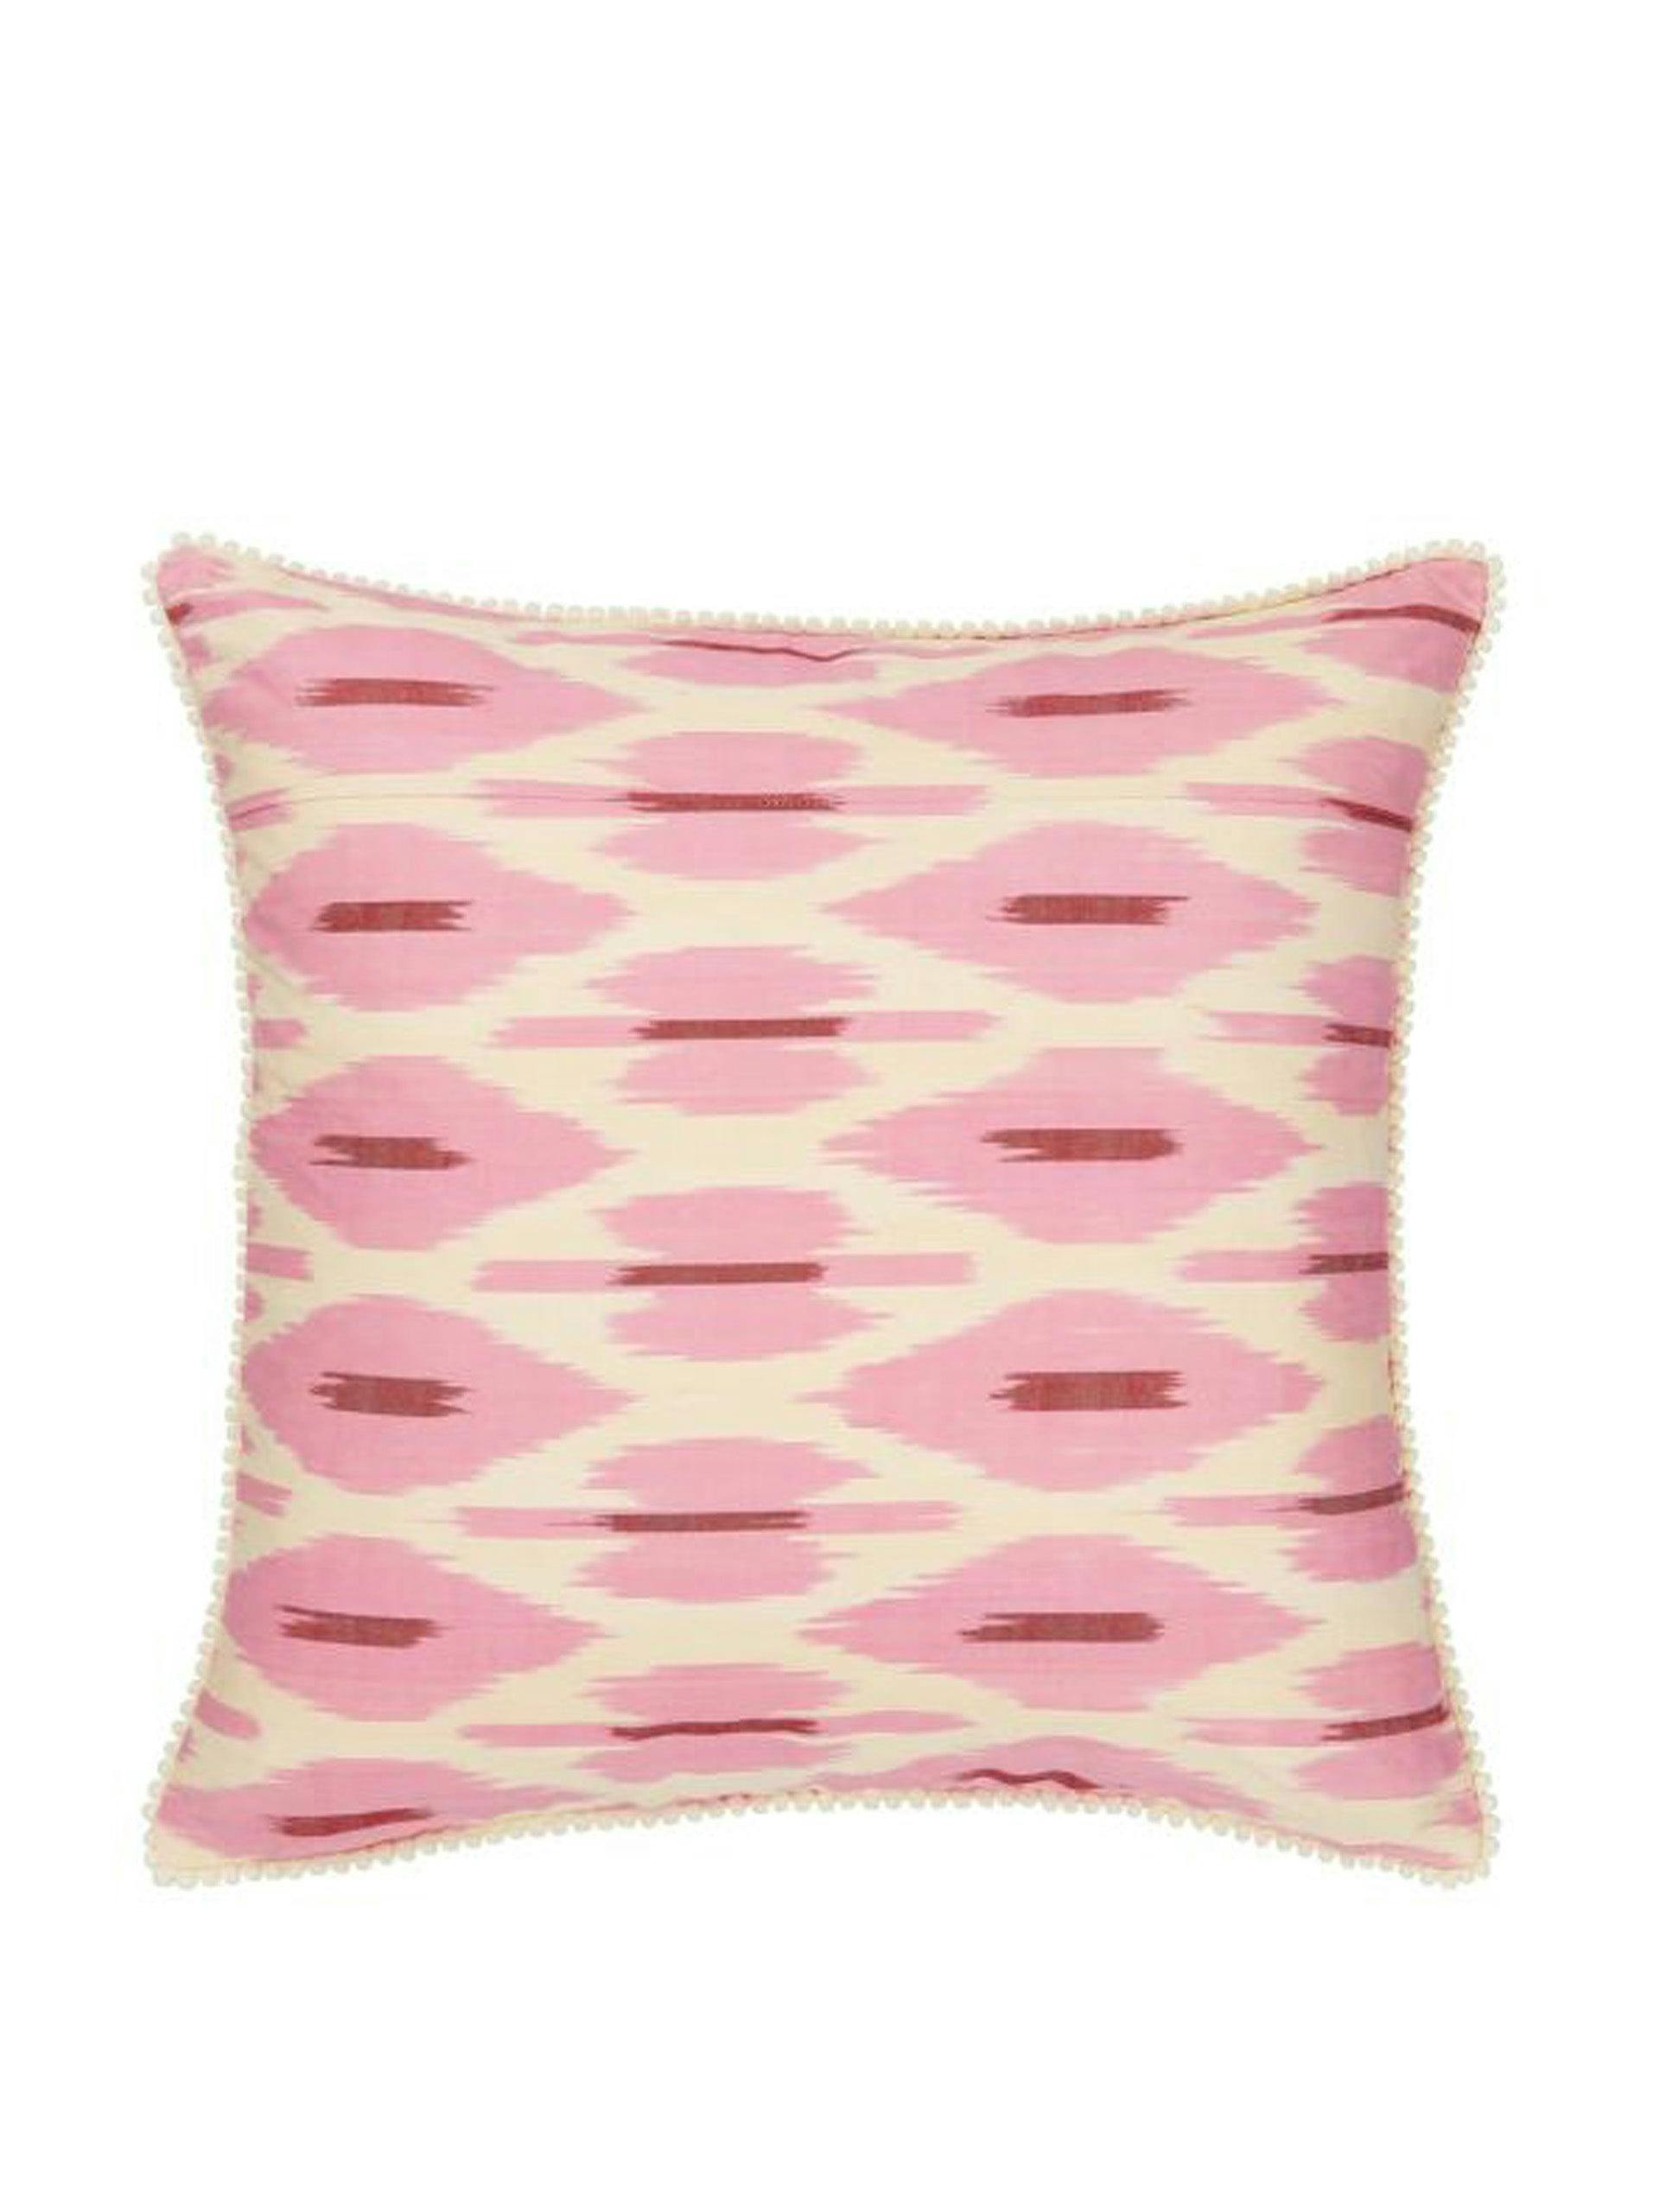 Luxury square ikat silk cushion pink and cream